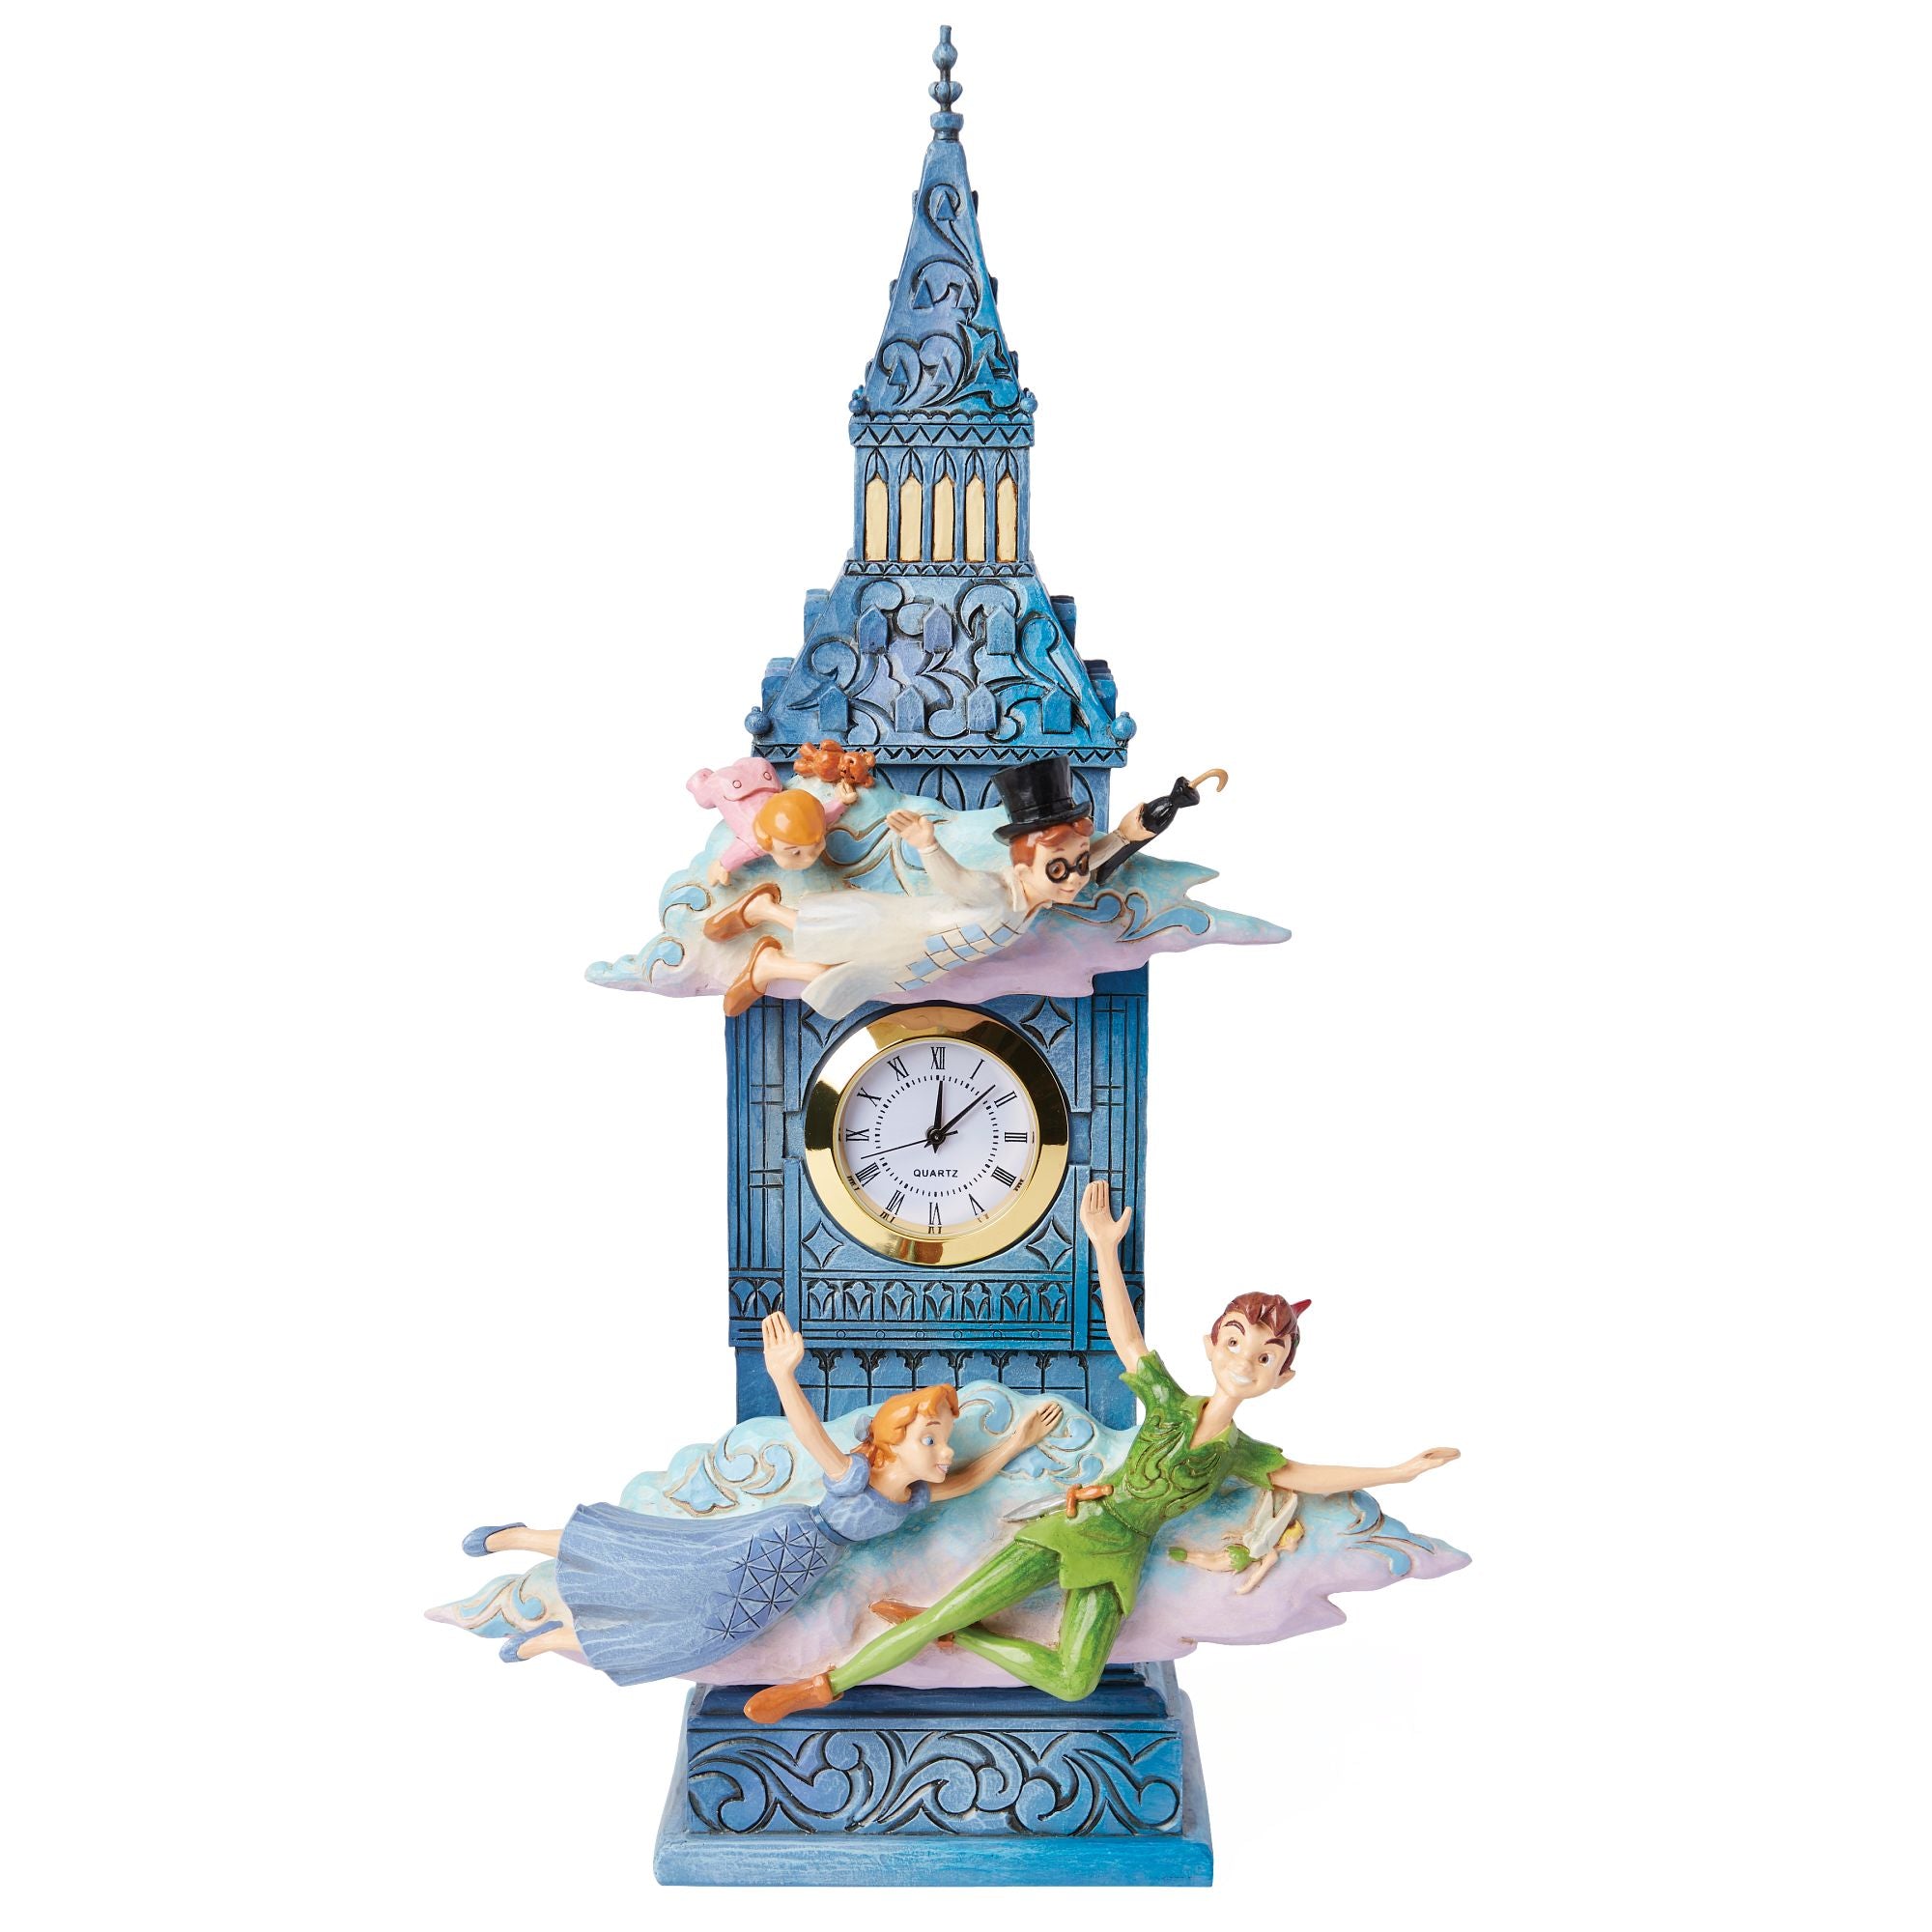 Peter Pan Clock